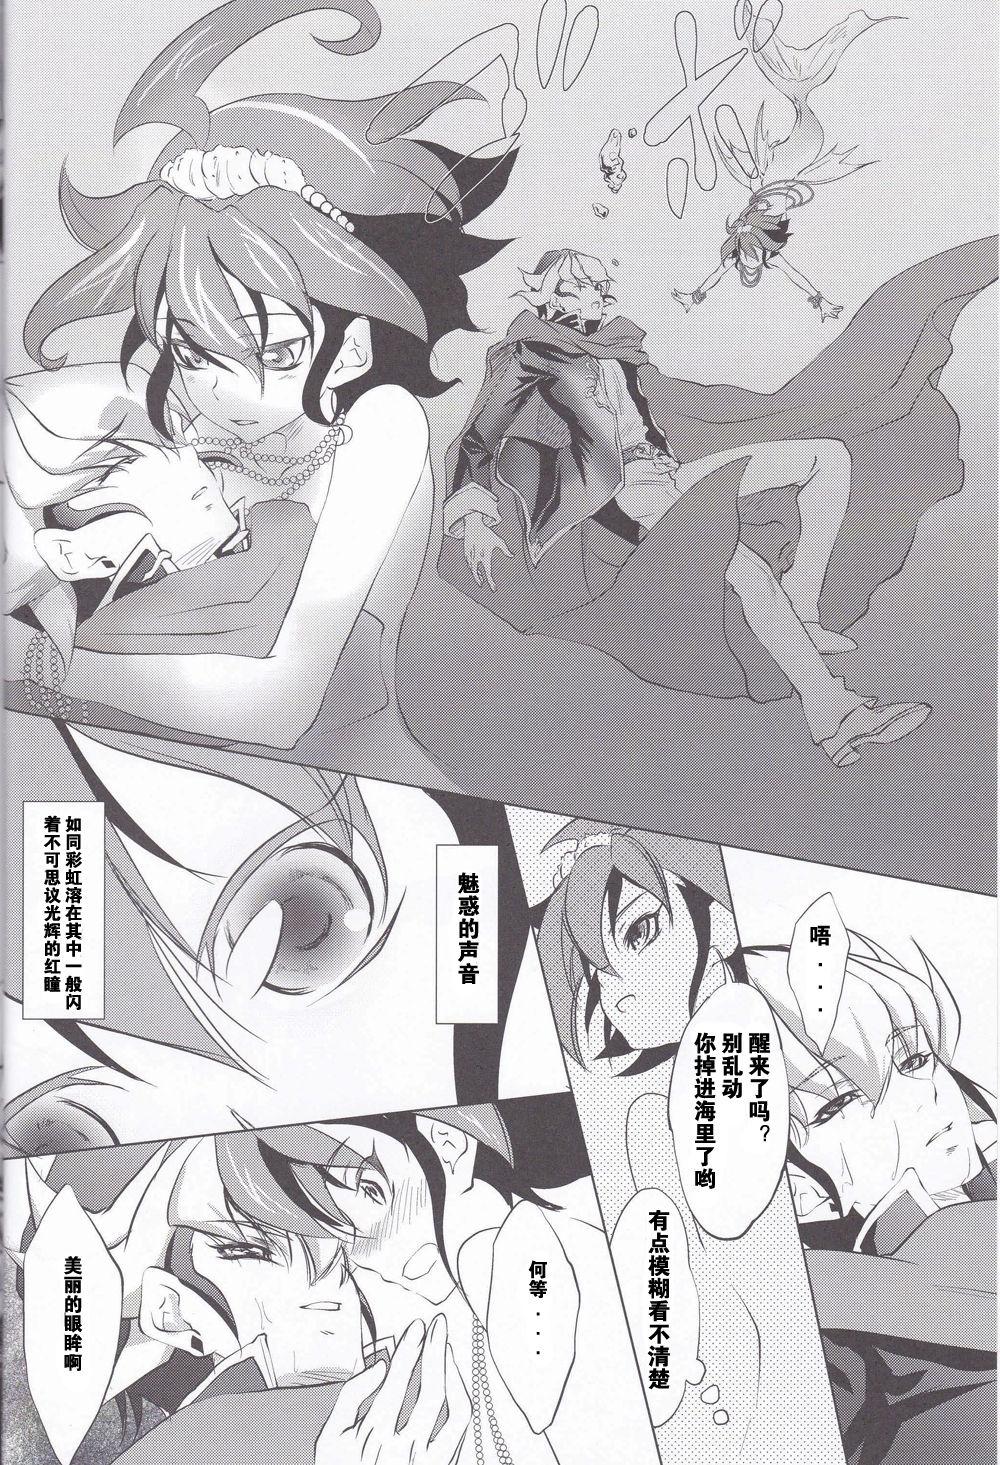 Whipping Mermaid Memory - Yu-gi-oh arc-v Mallu - Page 3